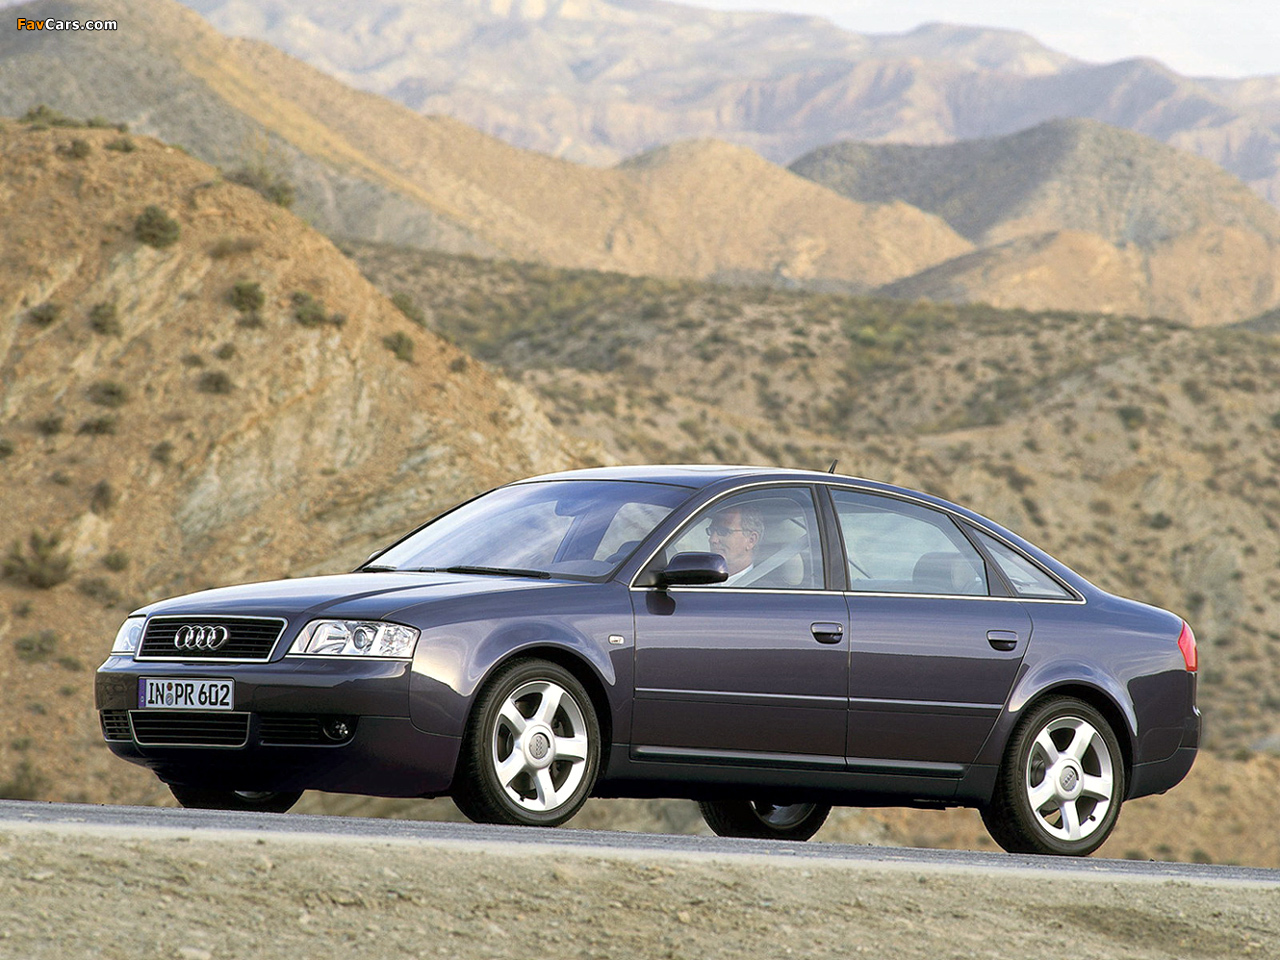 Ауди а6 с5 2001 год. Audi a6 c5. Audi a6 c5 2004. Ауди а6 седан 2001. Audi a6 c5 1998.